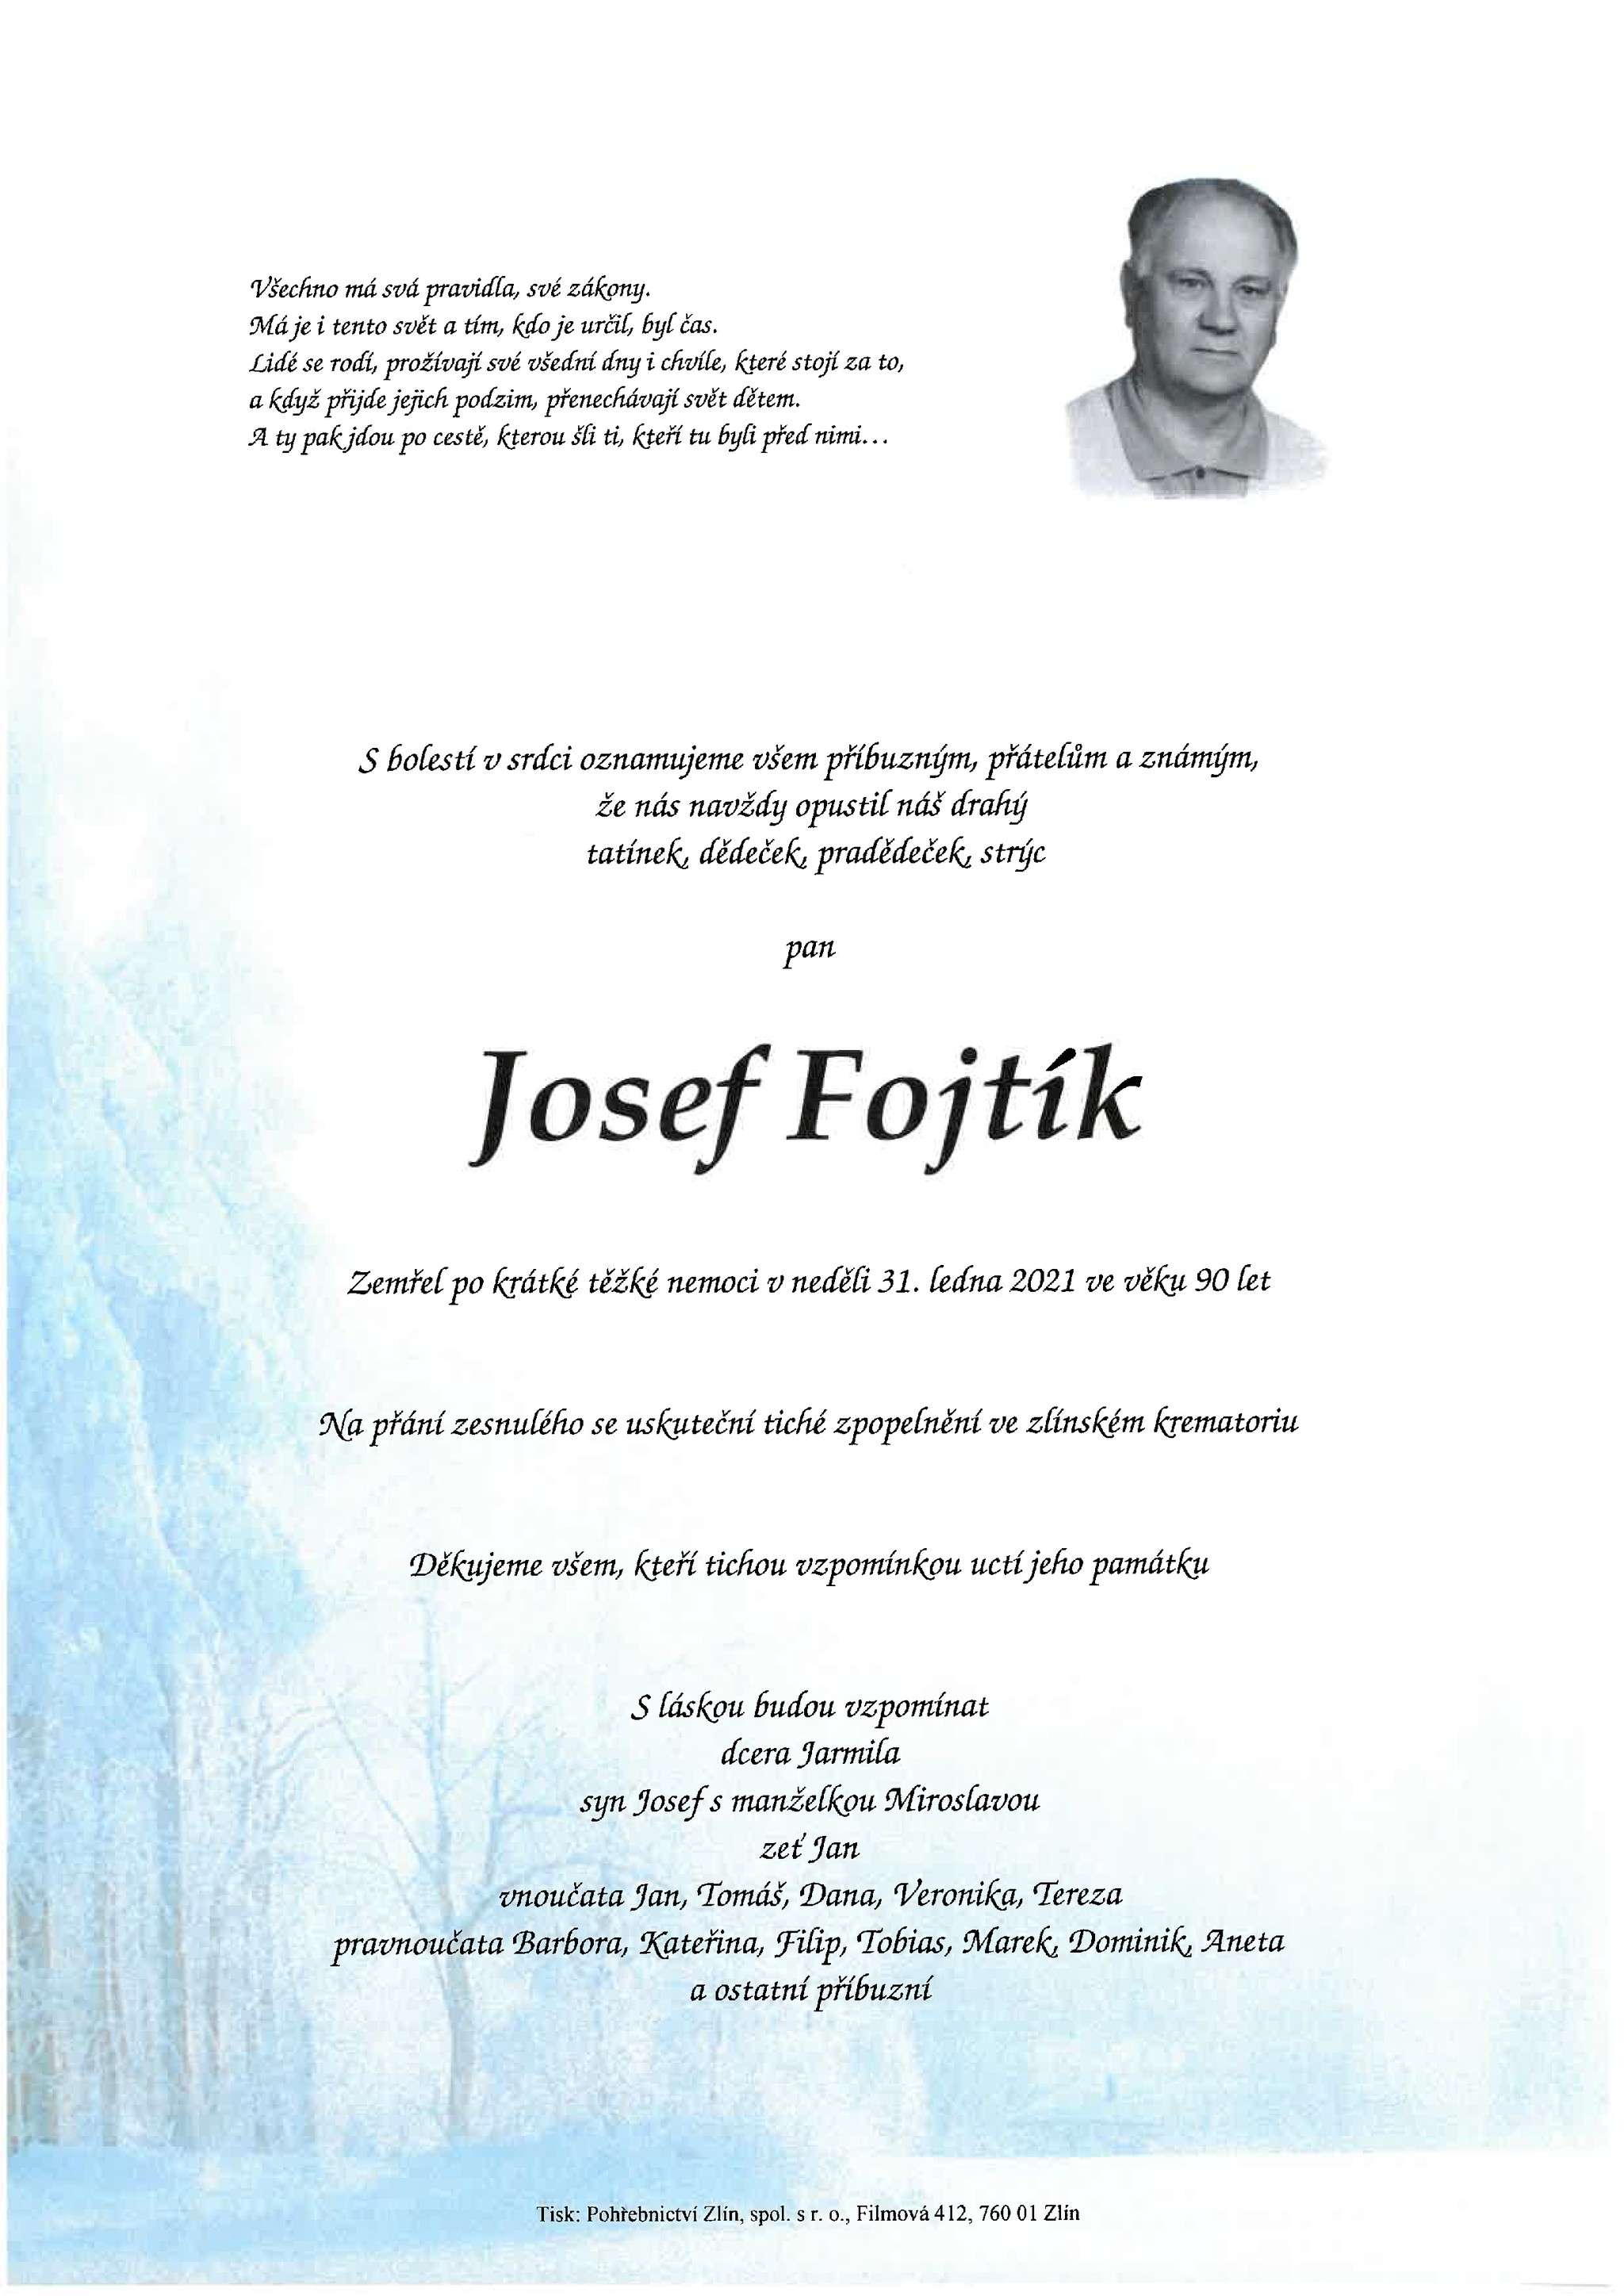 Josef Fojtík